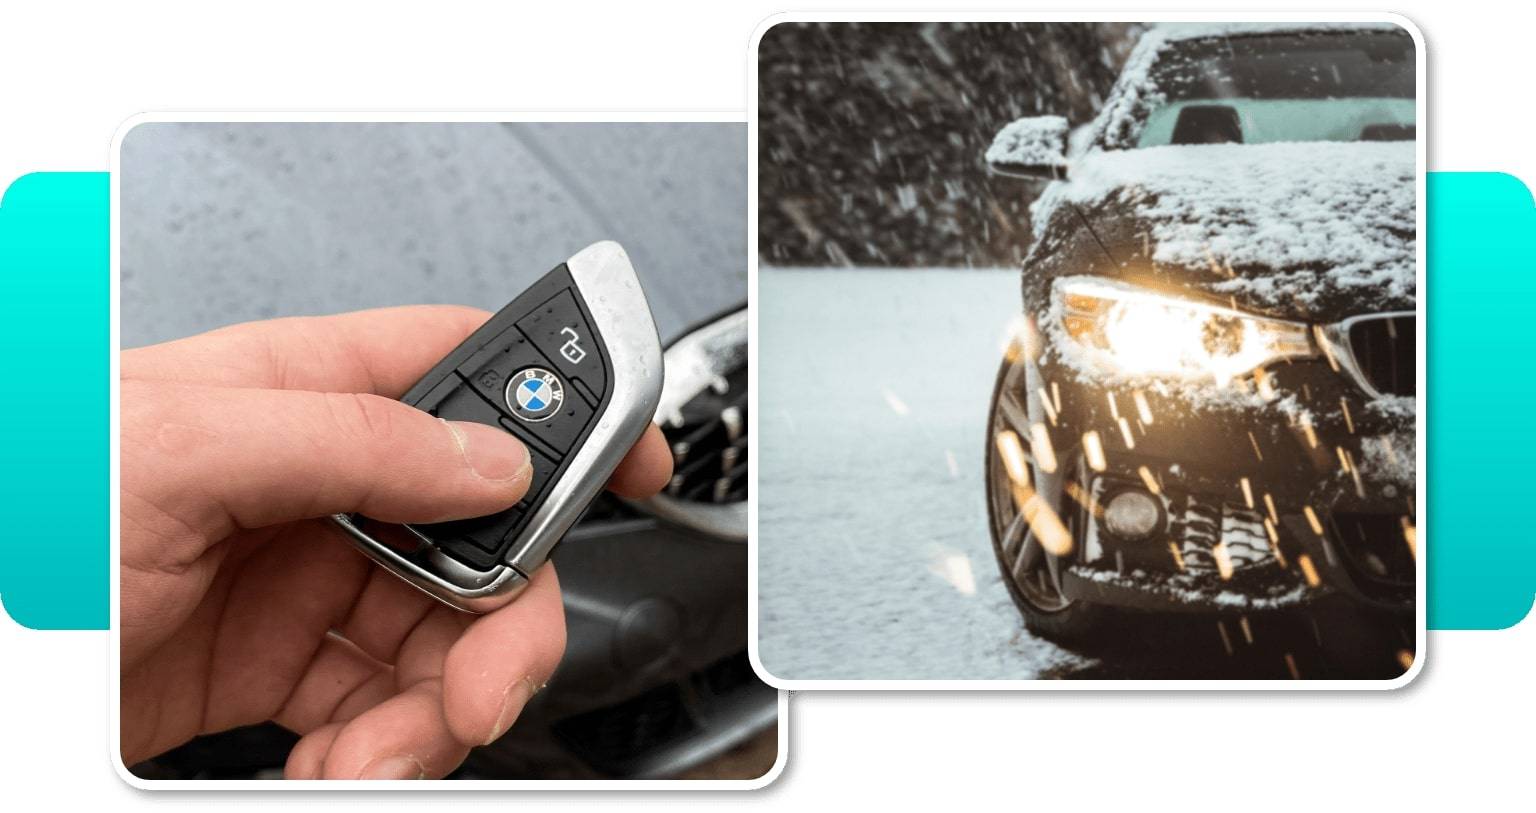 BMW remote start brings comfort